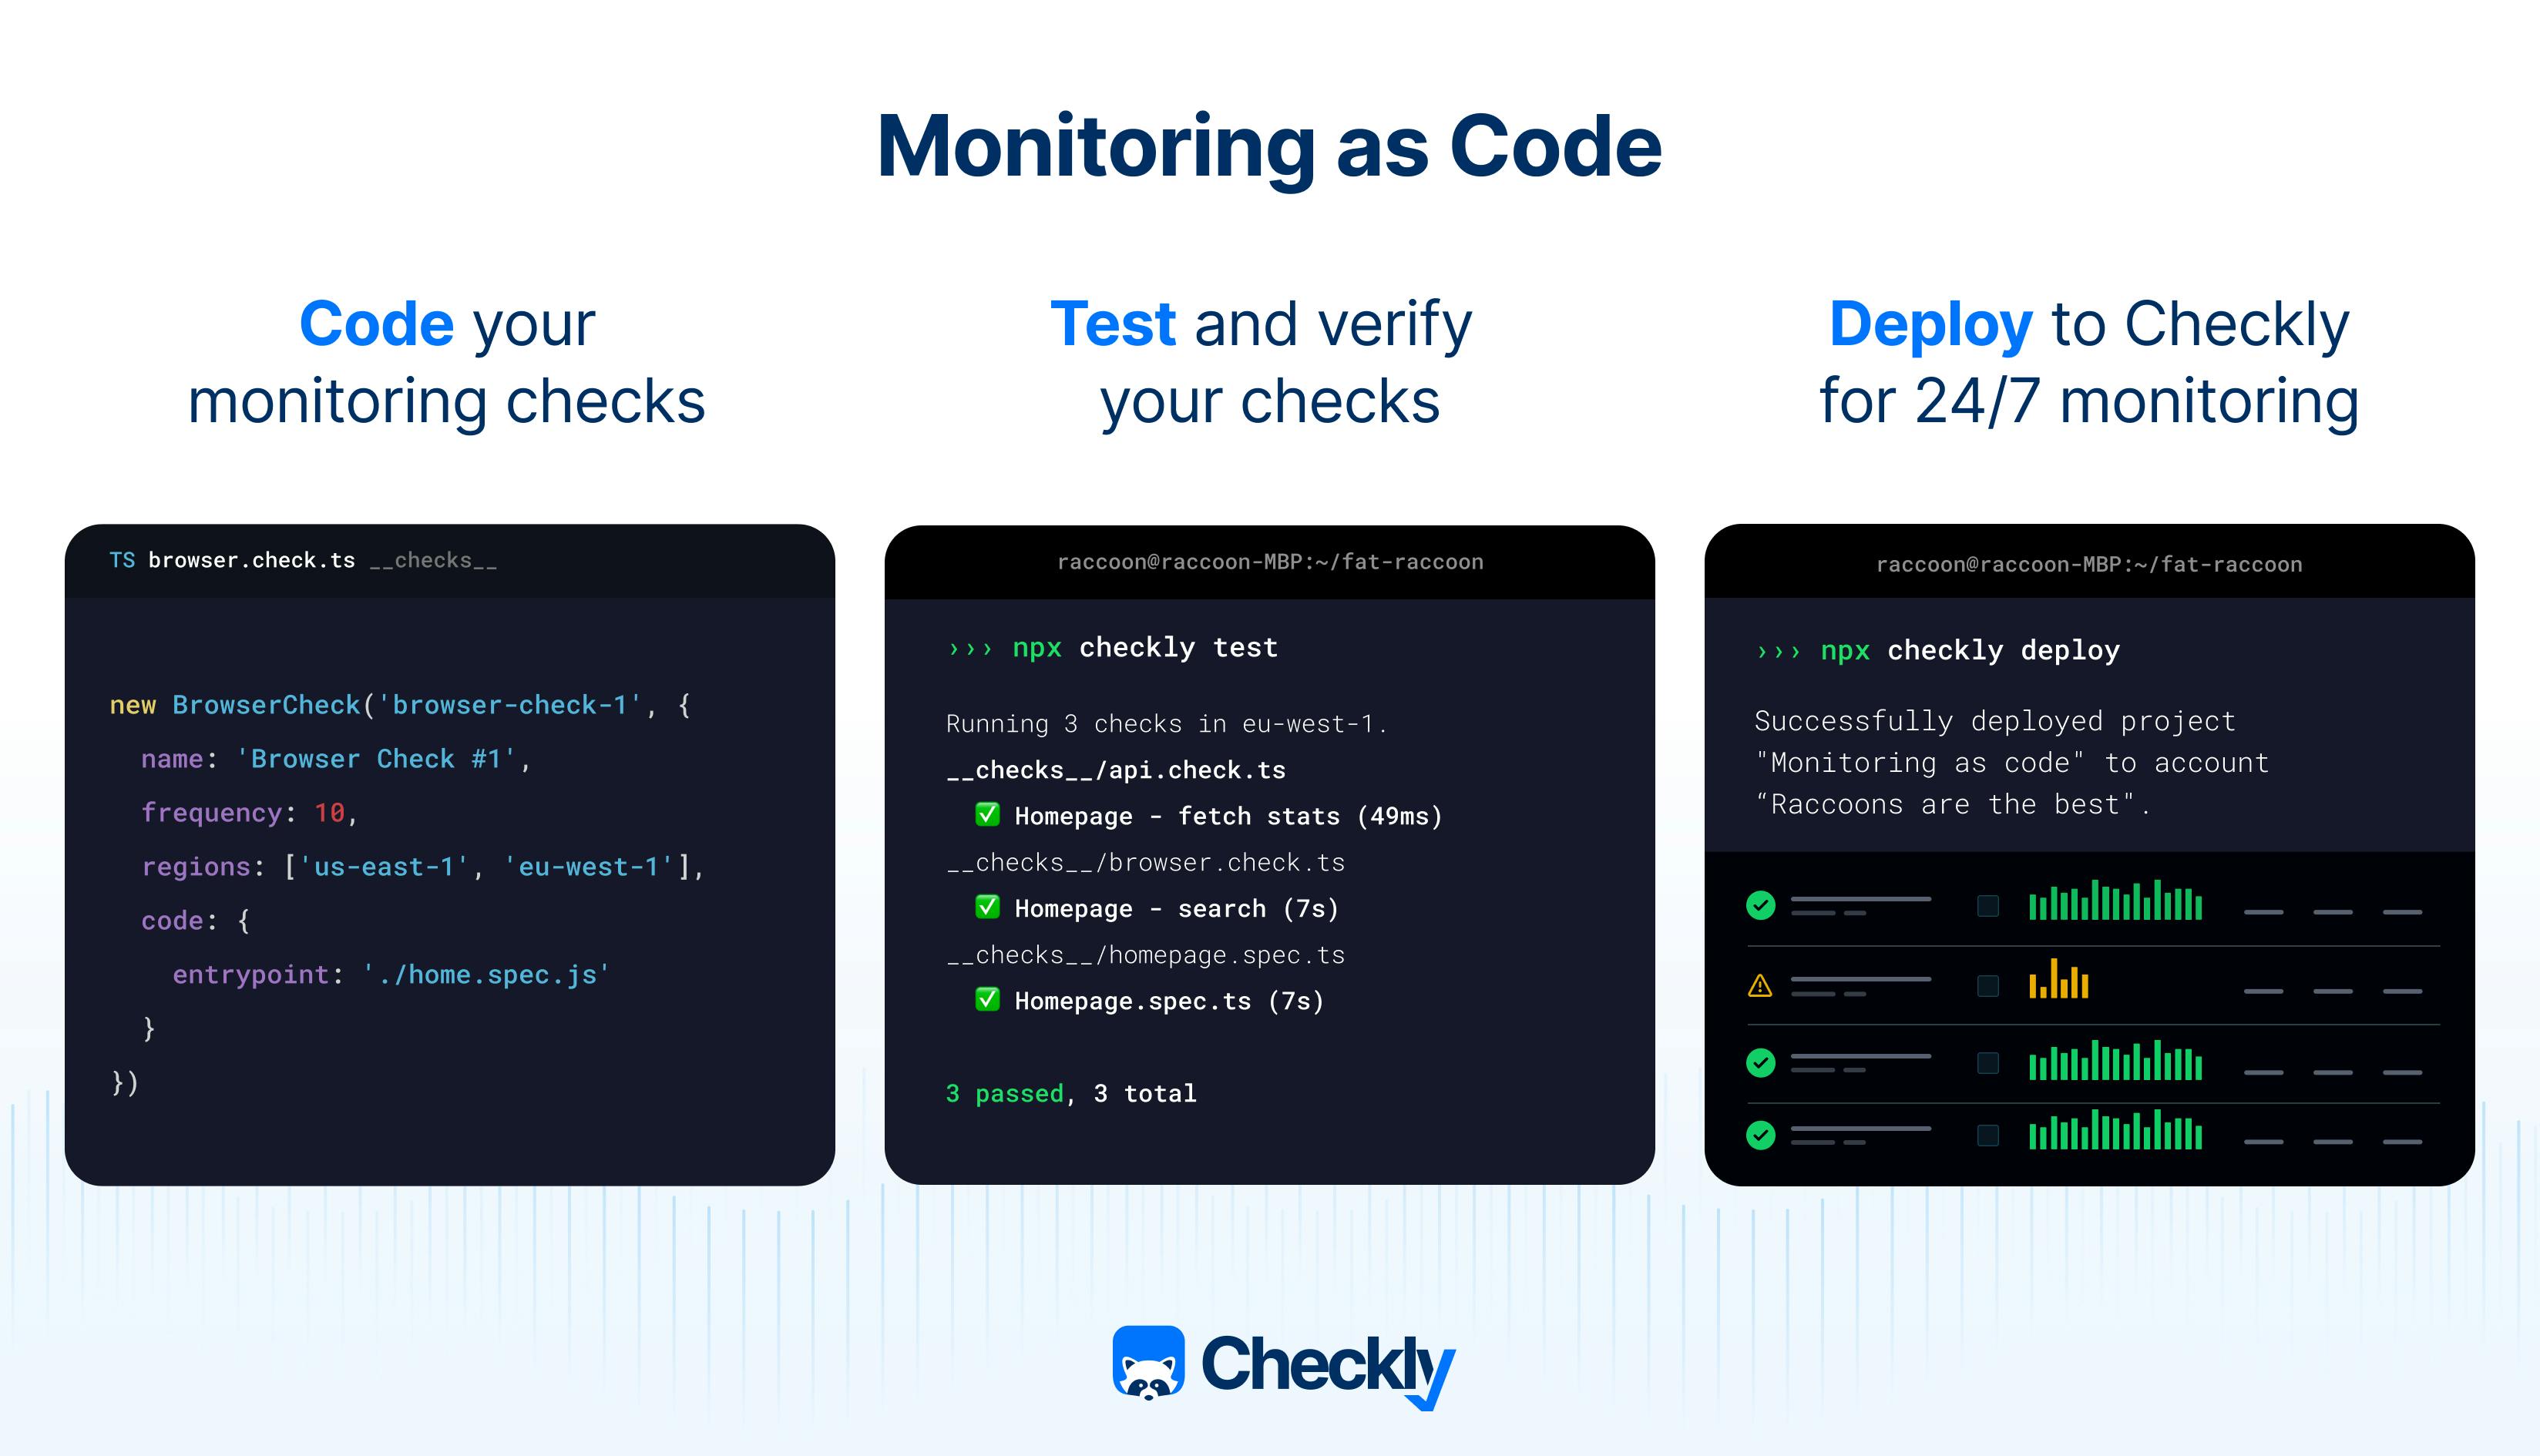 "Monitoring as Code" consisting of three pillars: Code, Test, Deploy.